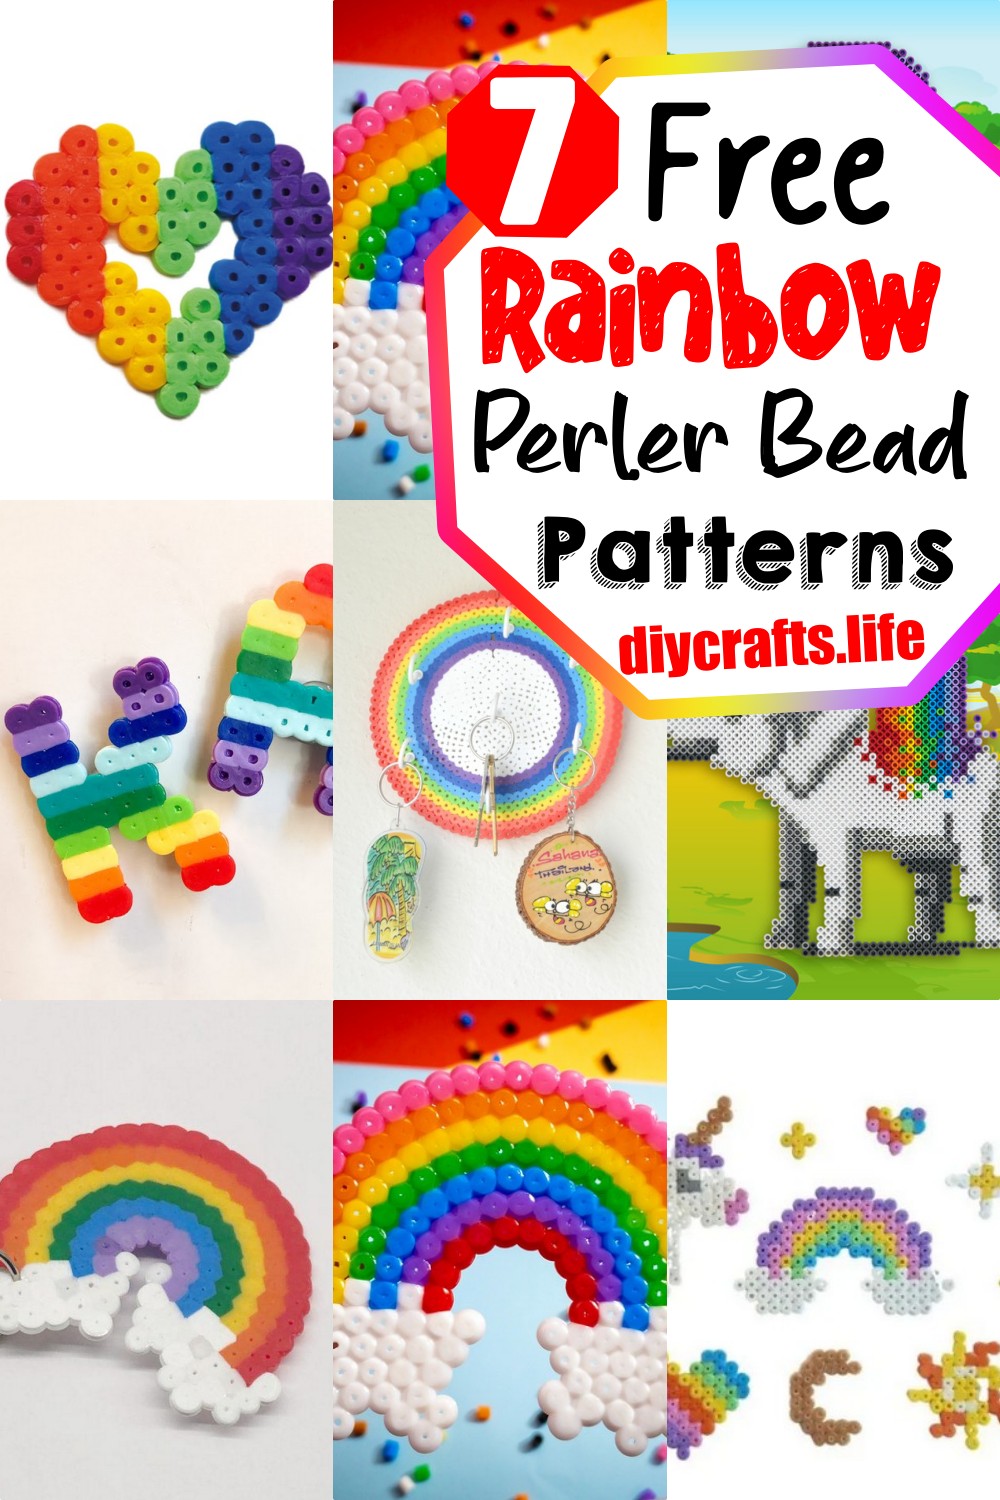 Rainbow Perler Bead Patterns